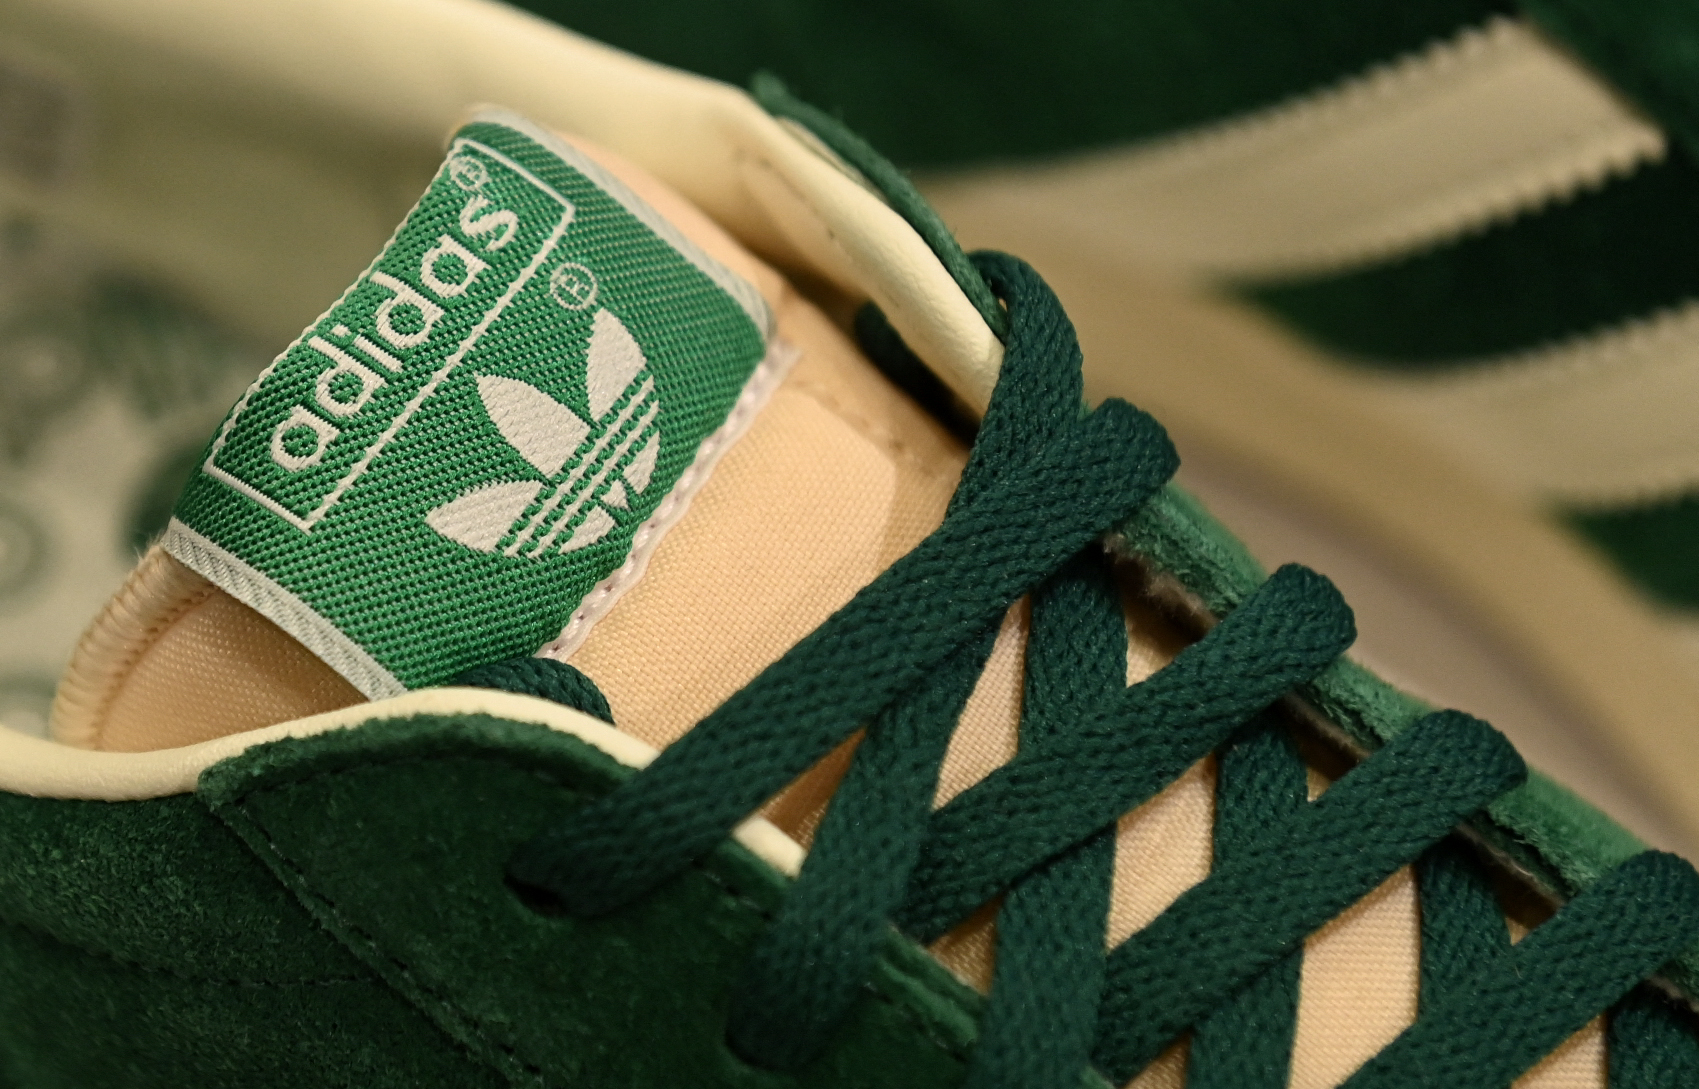 Yeezy Shoes Boost Adidas' Earnings Guidance - Bloomberg